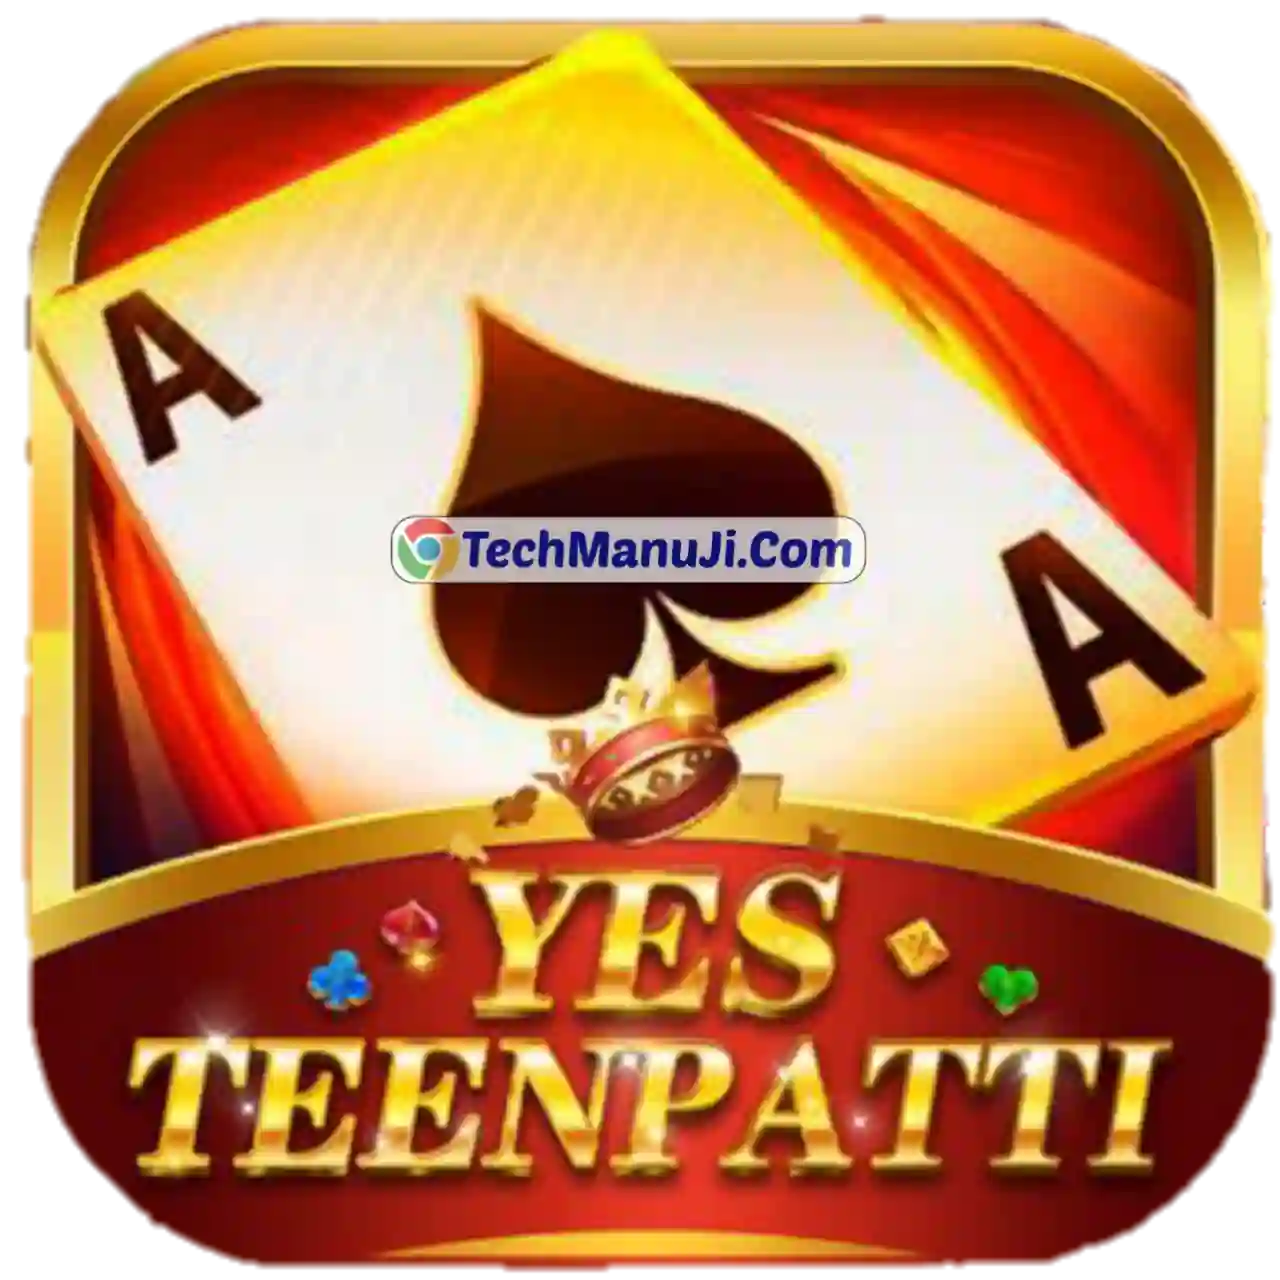 Teen Patti Yes Mod App Logo